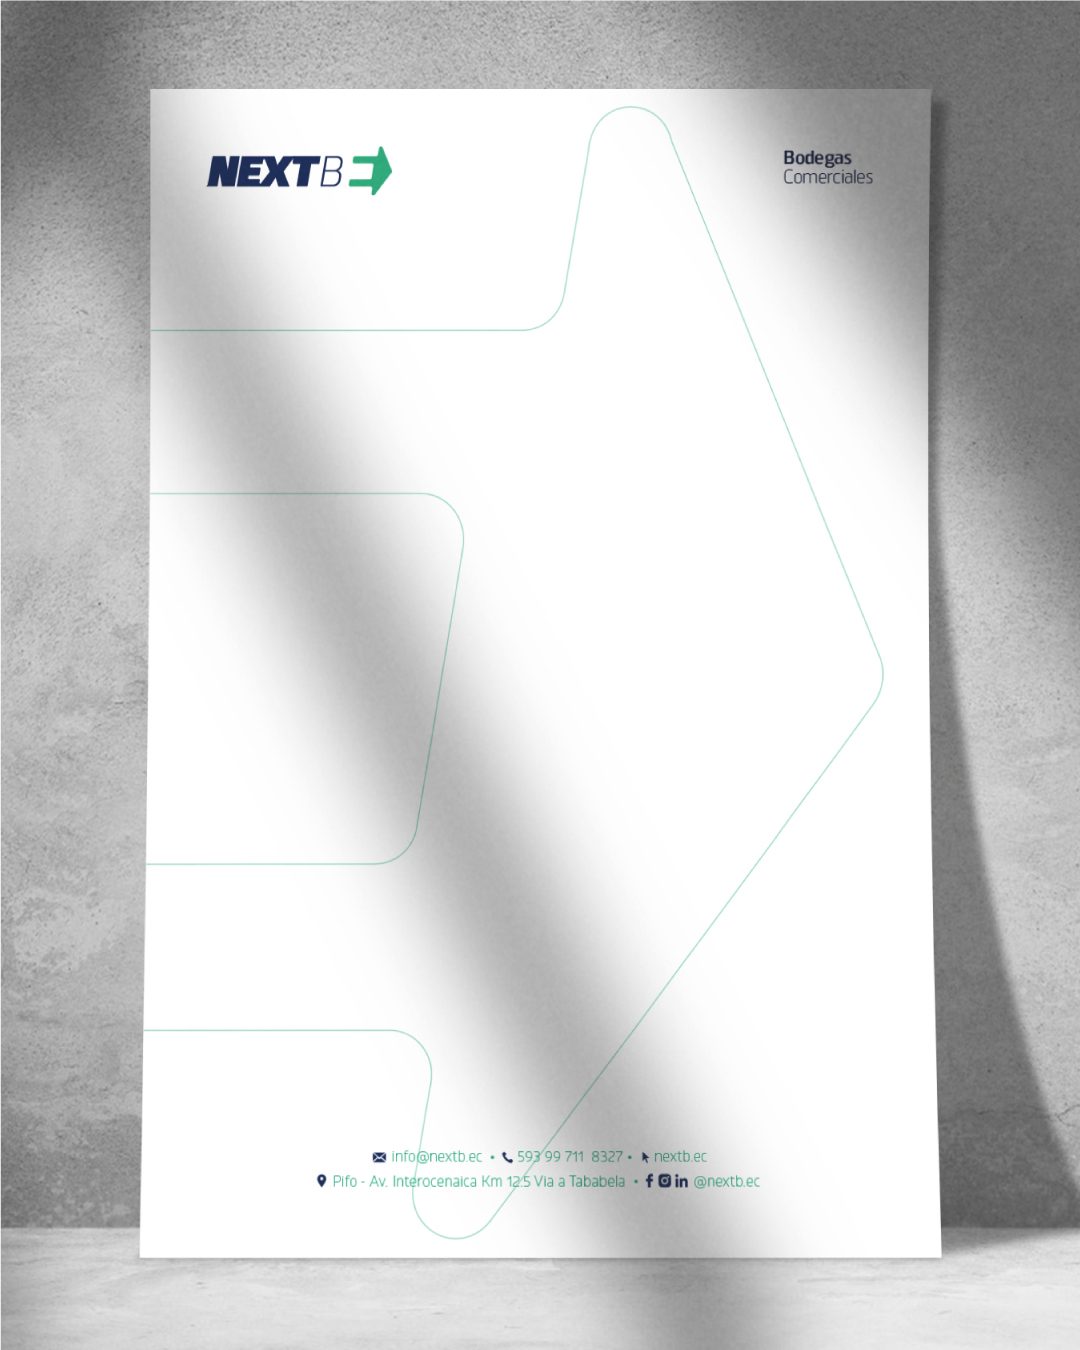 Next-B-Branding-Web-Por-IluminareStudio-19